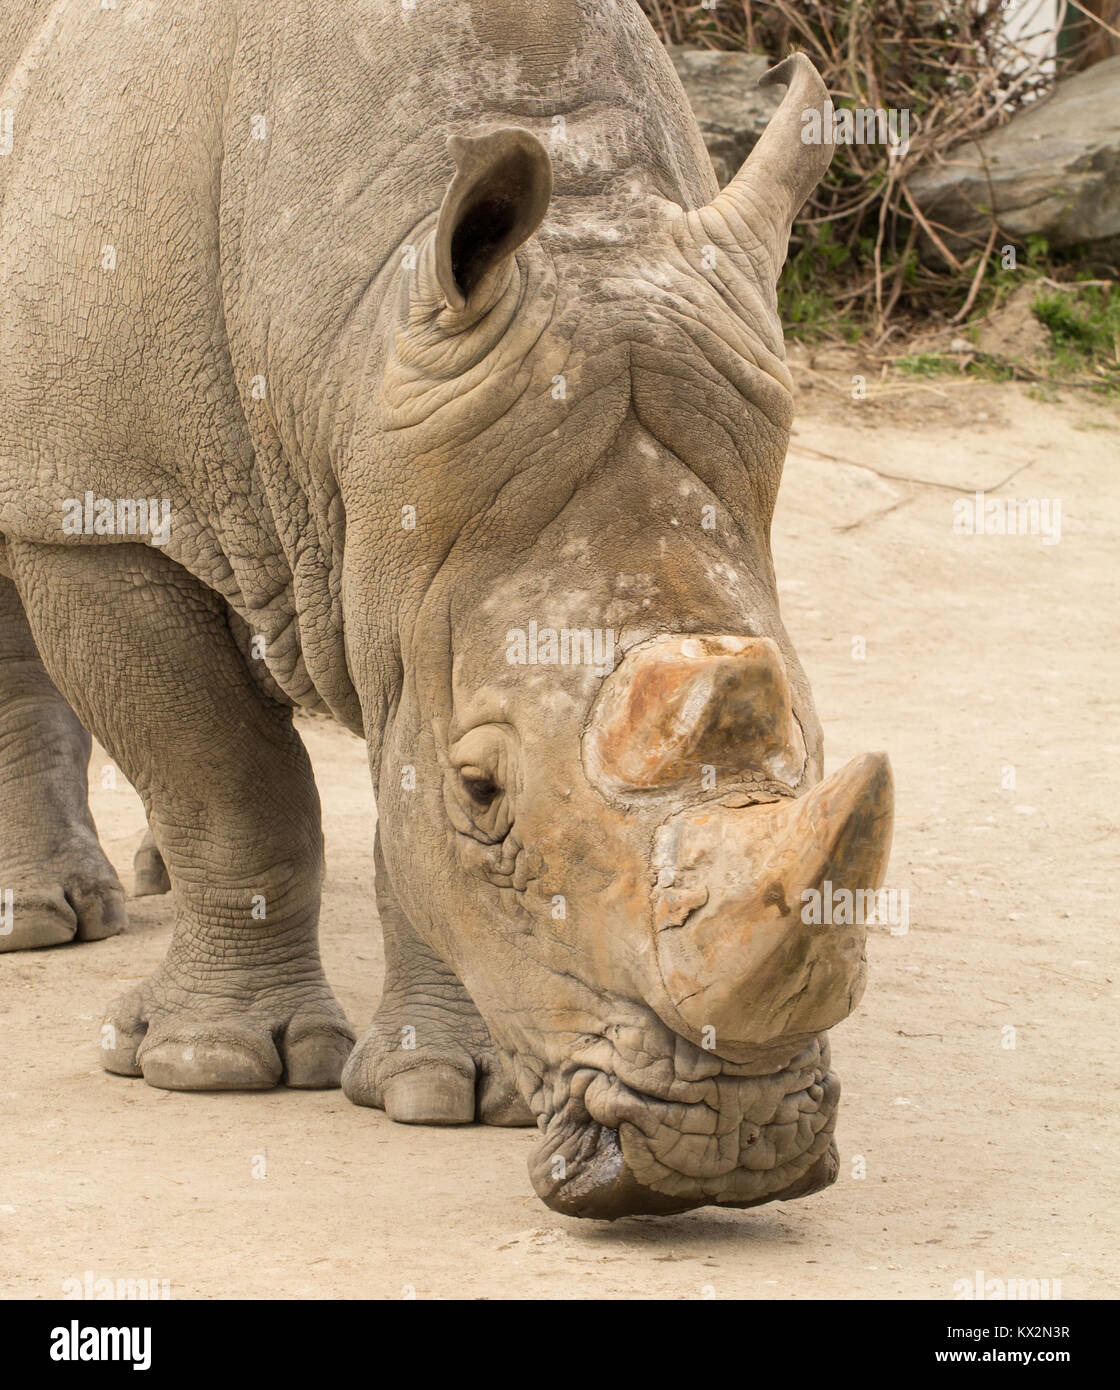 Rhinocero gros plan de la tête Banque D'Images